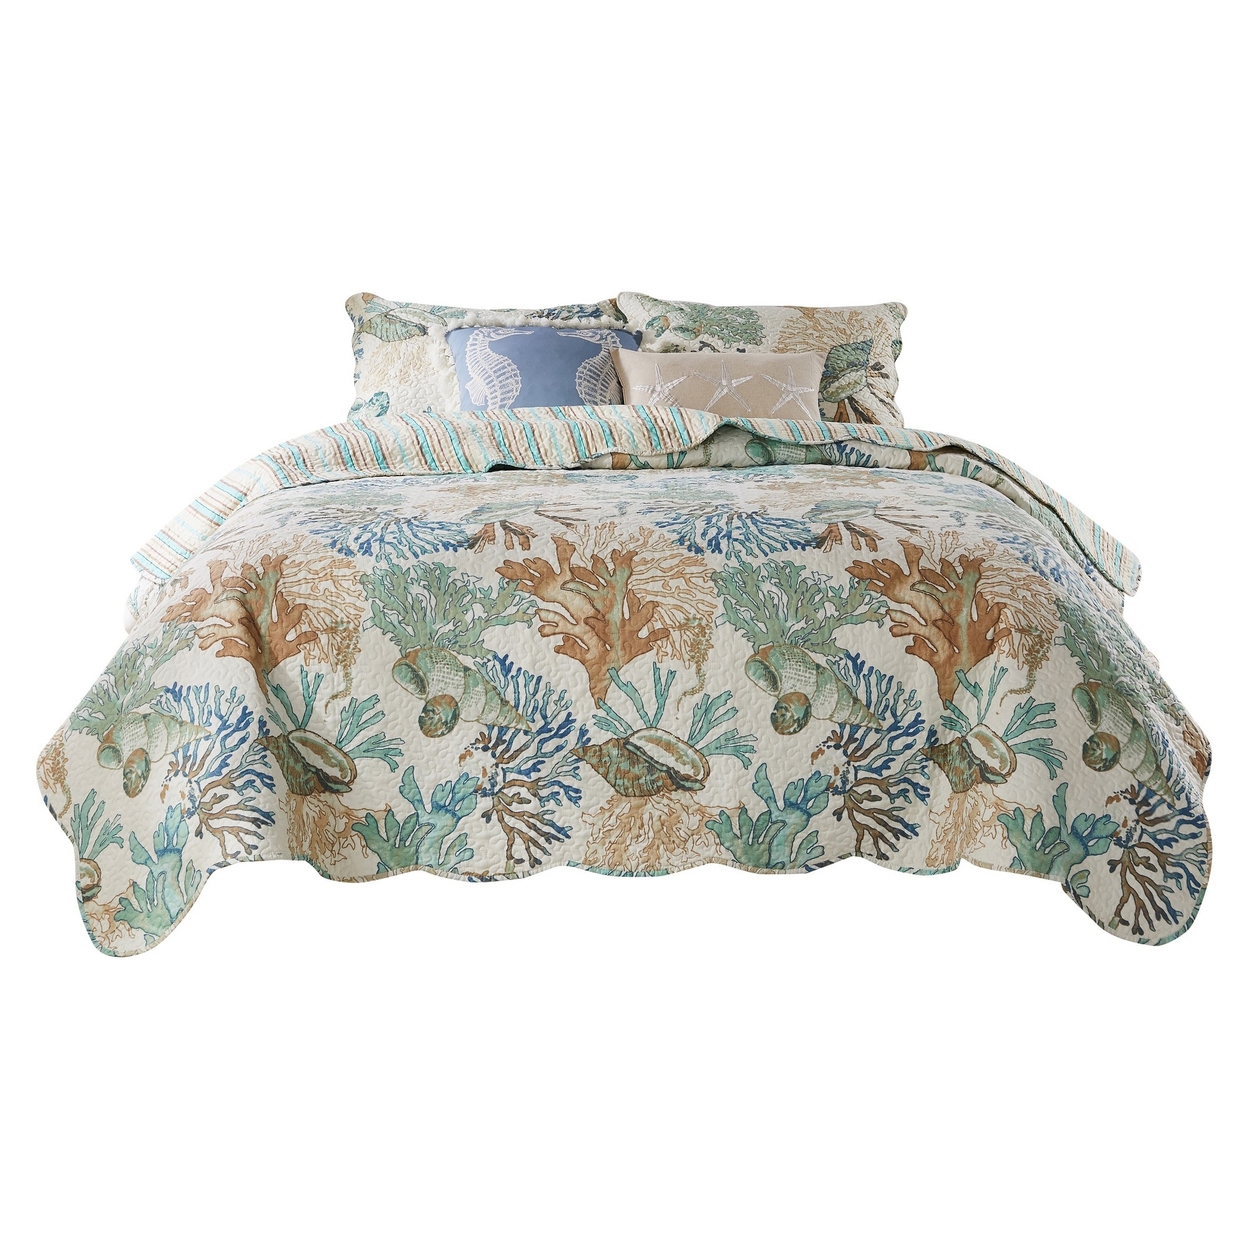 Wade 2pc Twin Quilt And Pillow Sham Set, Cotton Fill, Coastal Seashell Jade-Saltoro Sherpi